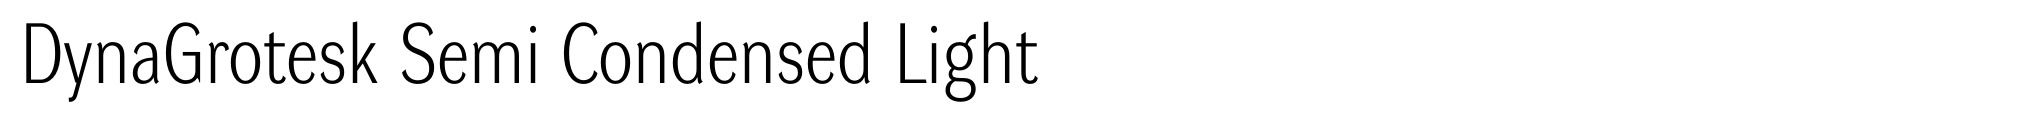 DynaGrotesk Semi Condensed Light image